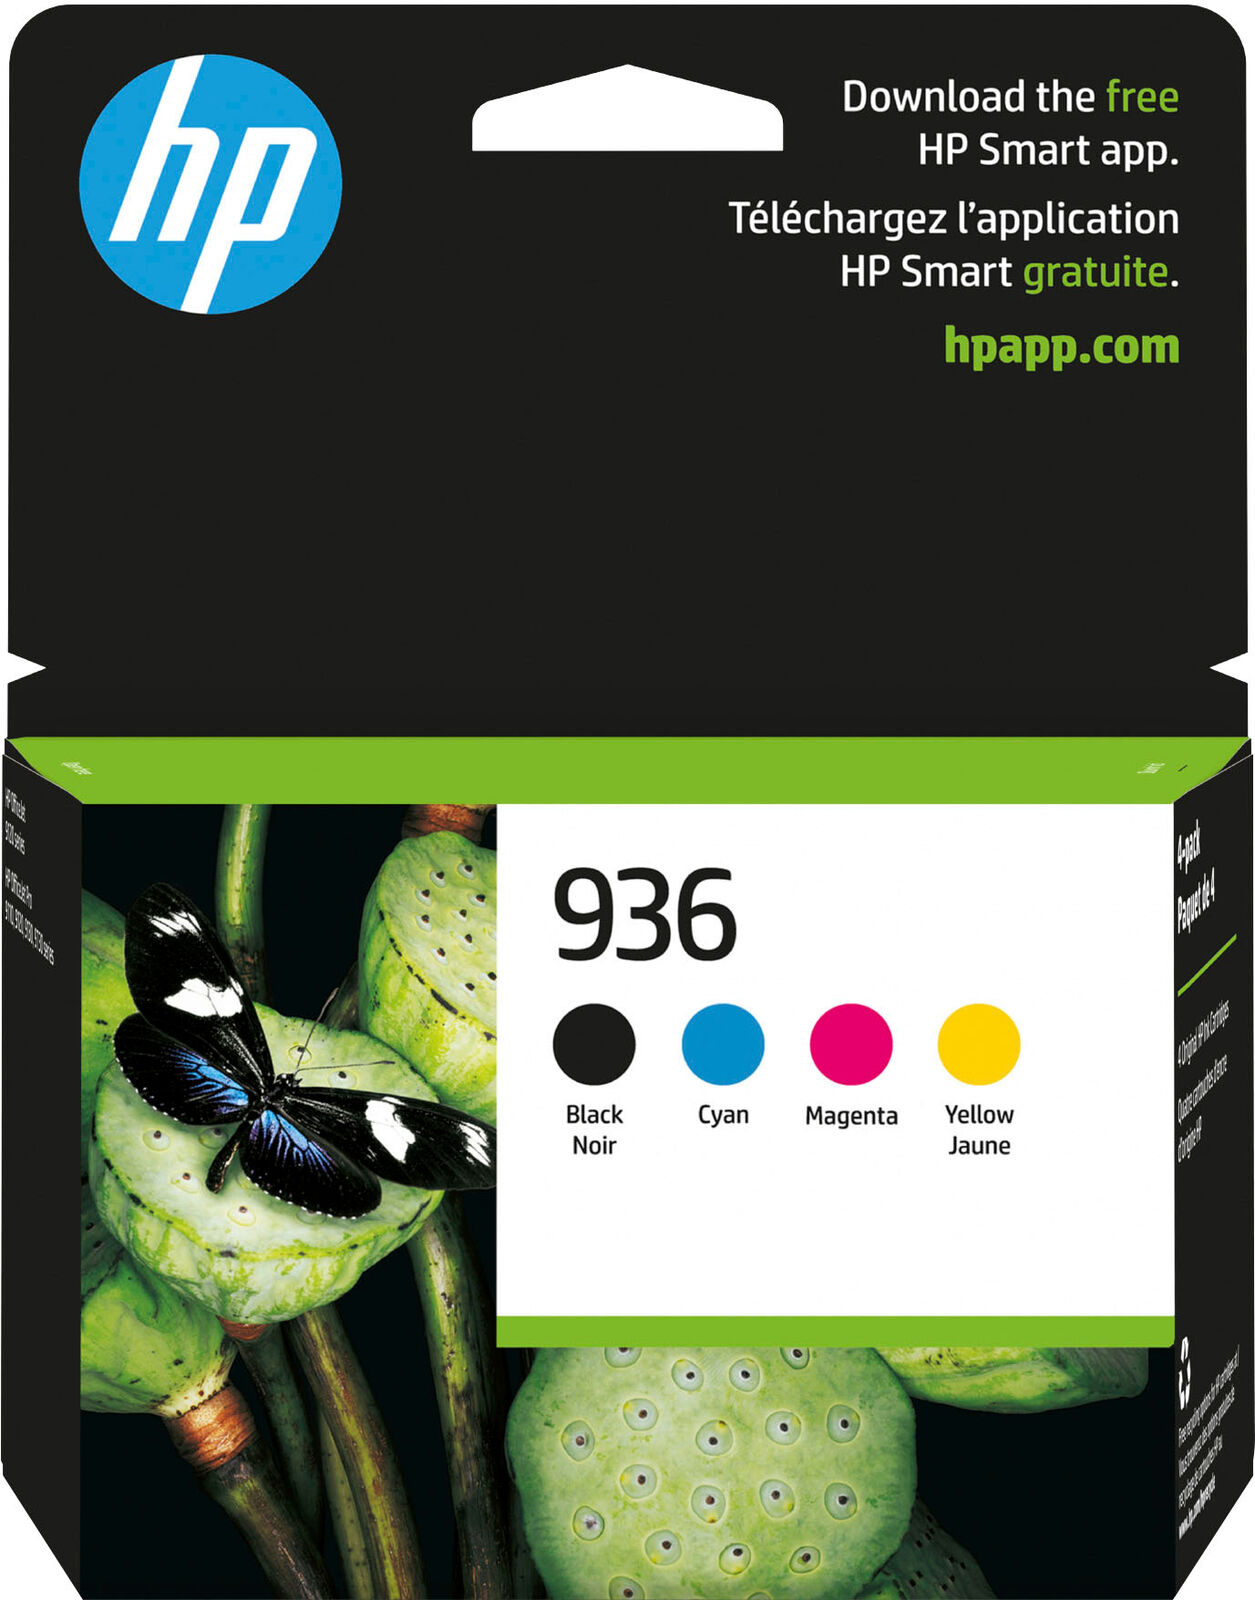 HP - 936 4-Pack Standard Capacity Ink Cartridges - Black/Magenta/Yellow/Cyan